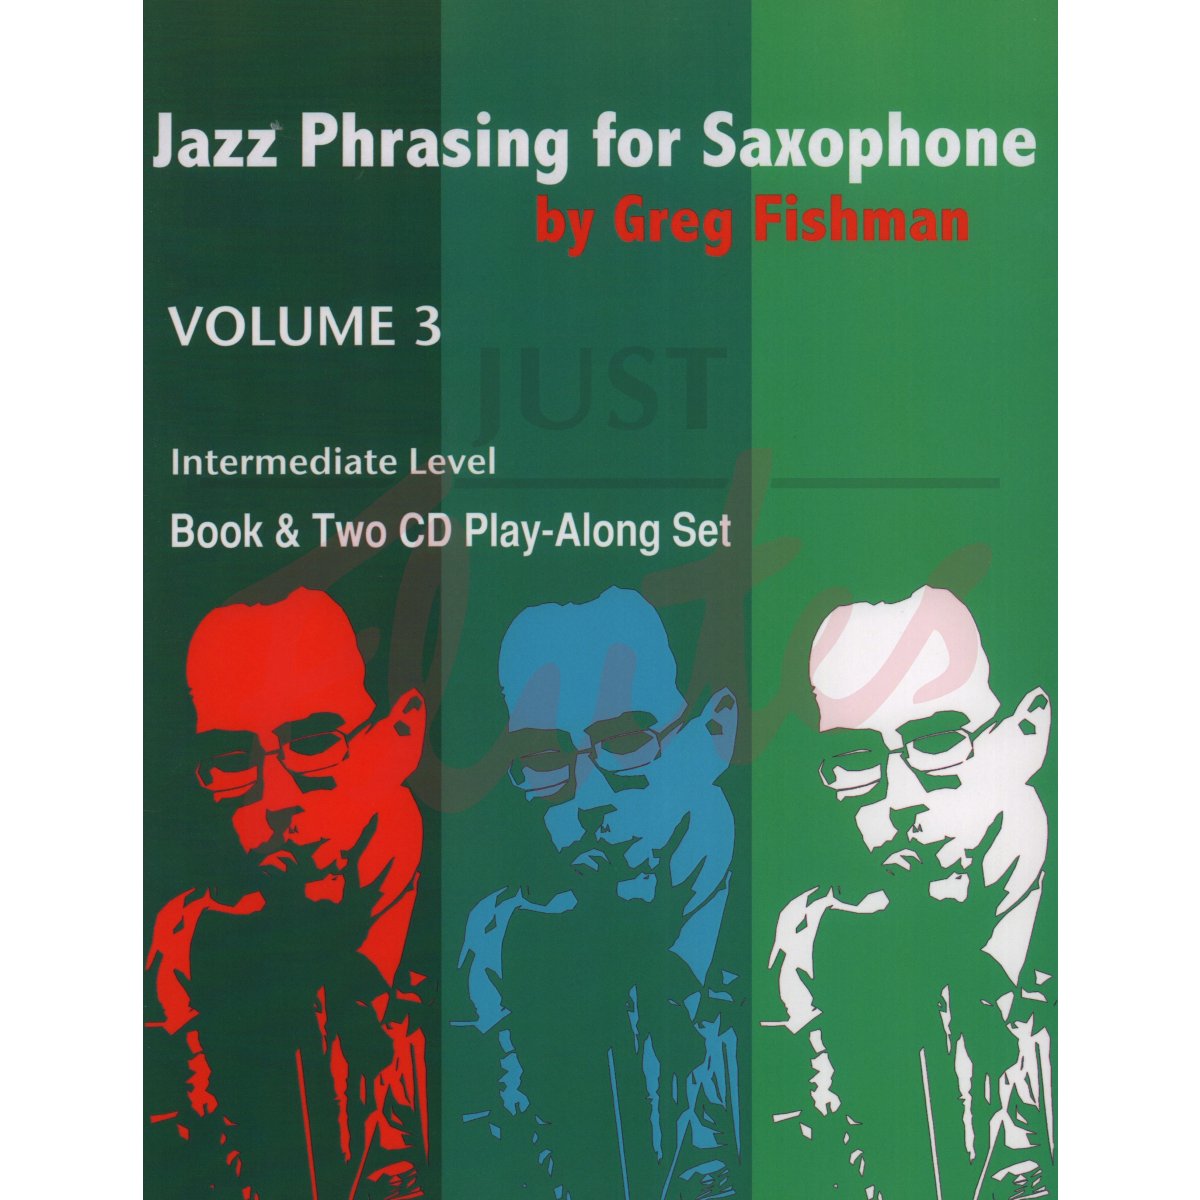 Jazz Phrasing for Saxophone Vol. 3